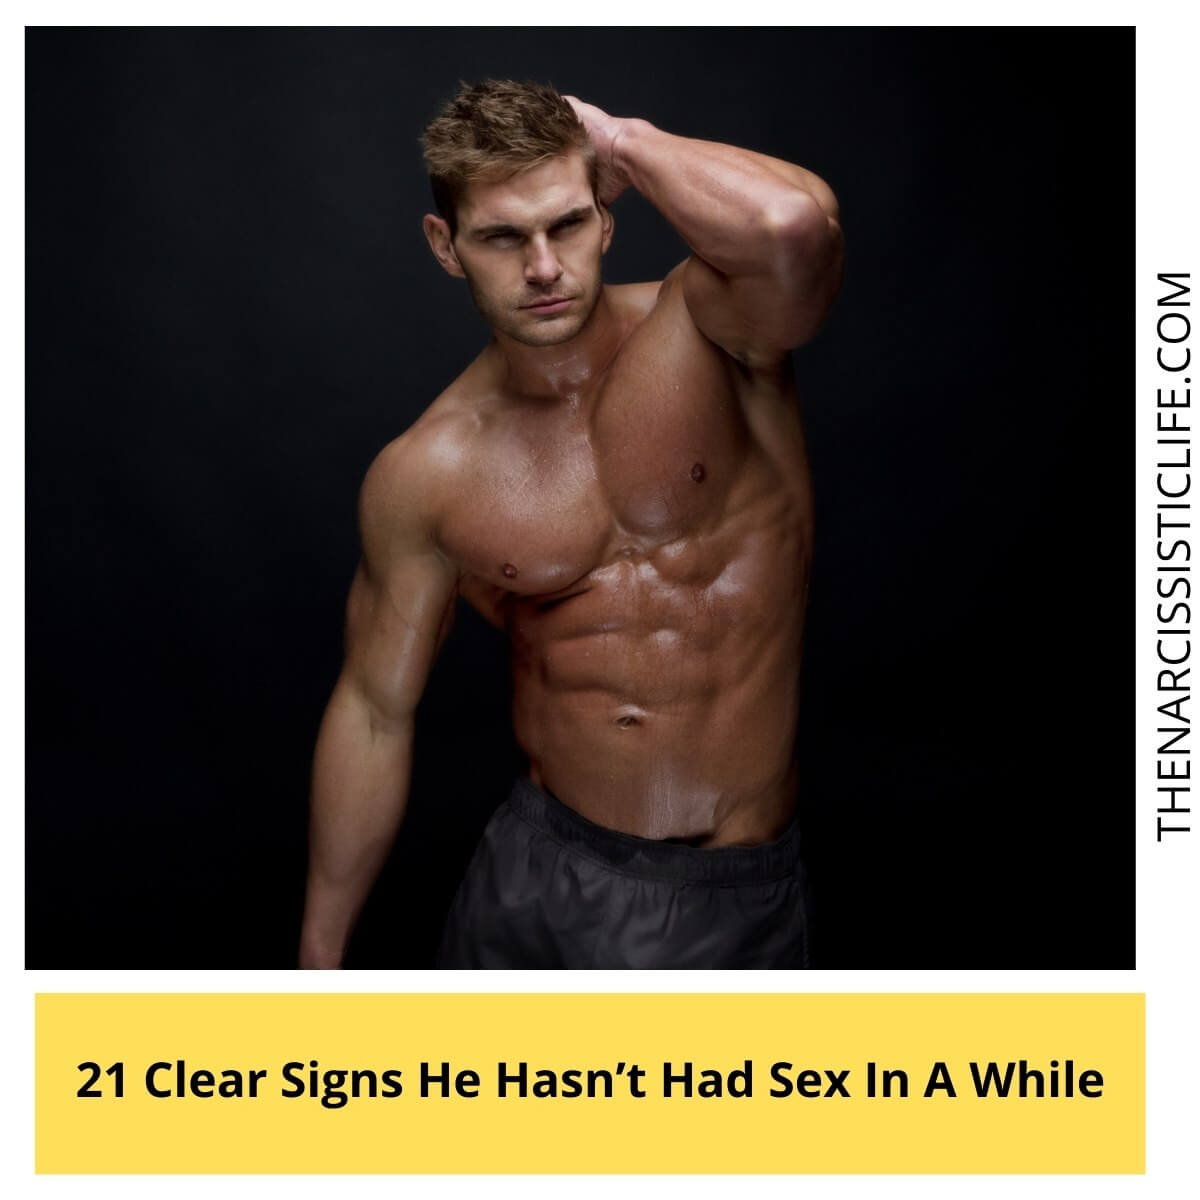 signs of sexual arousal in men